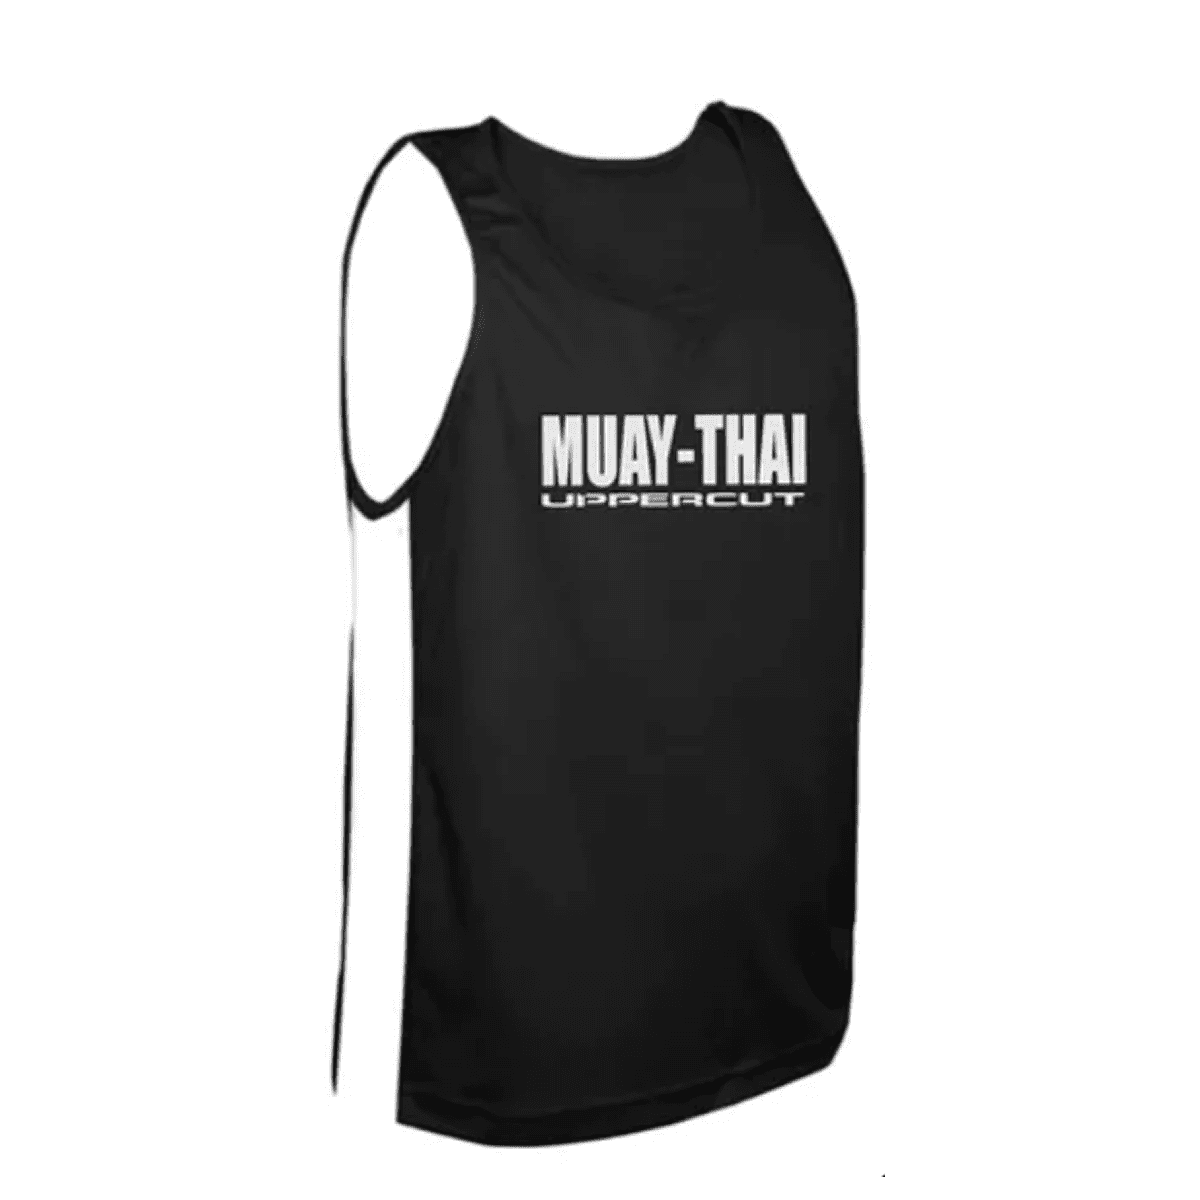 Regata Esportiva Dry Fit - Muay Thai - Preta/Branca - UV-50+  - Loja do Competidor